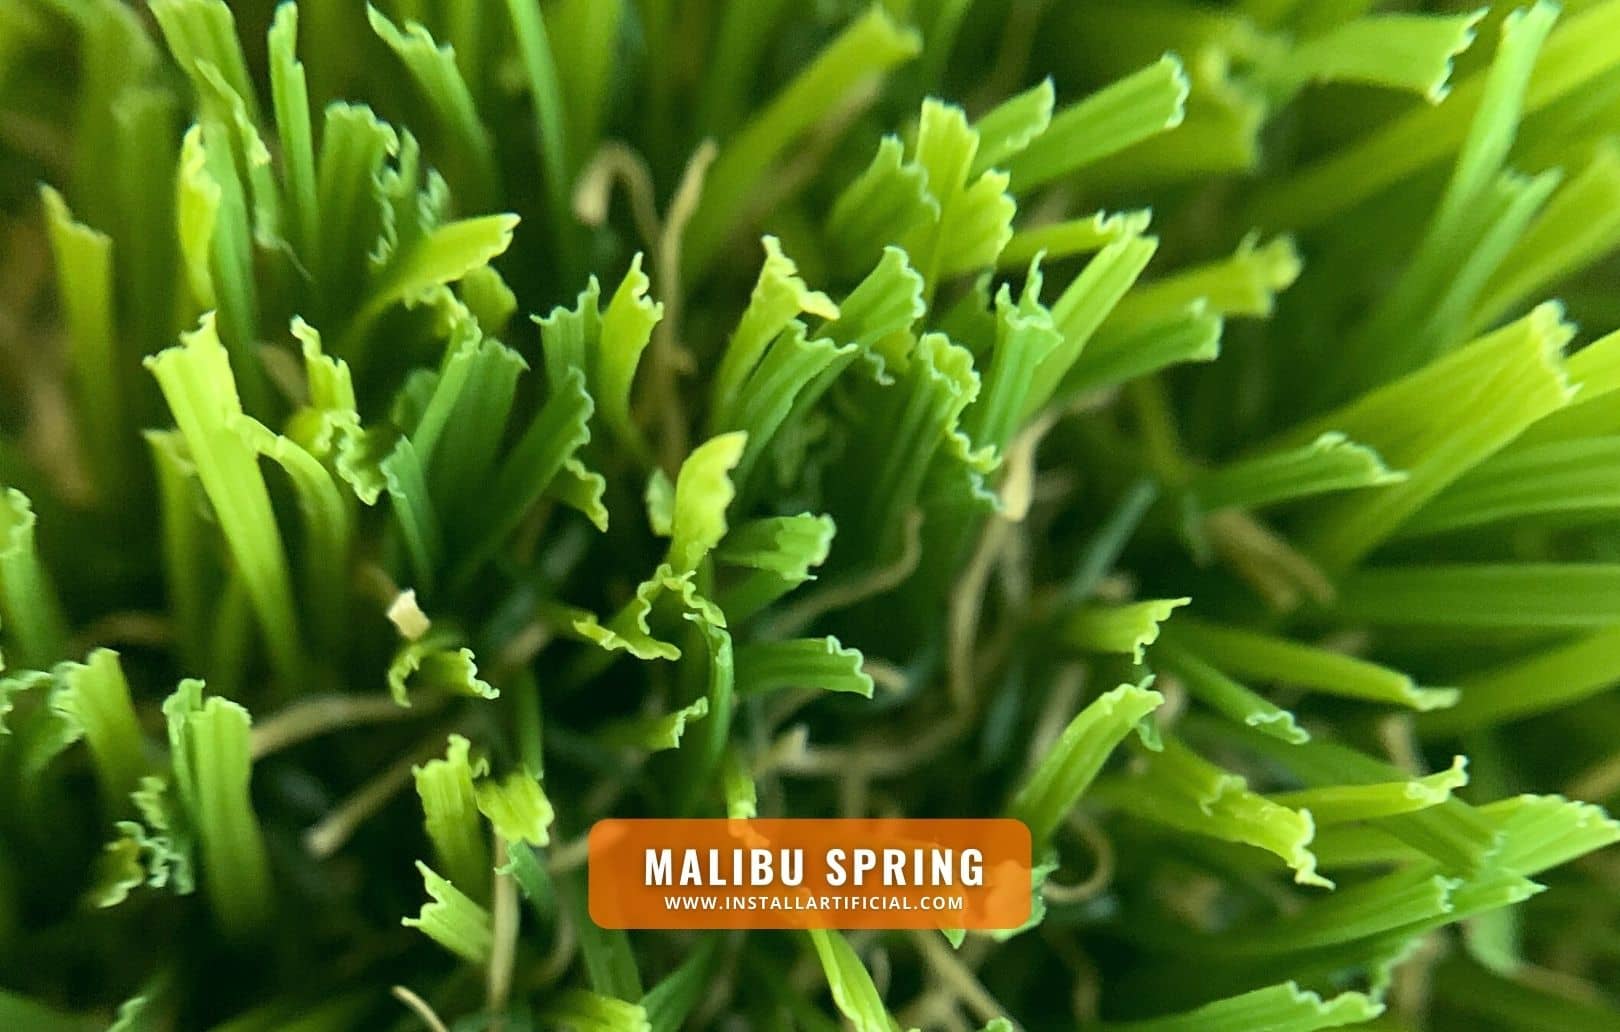 Malibu Spring, Synthetic Grass Warehouse, Everlast, macro